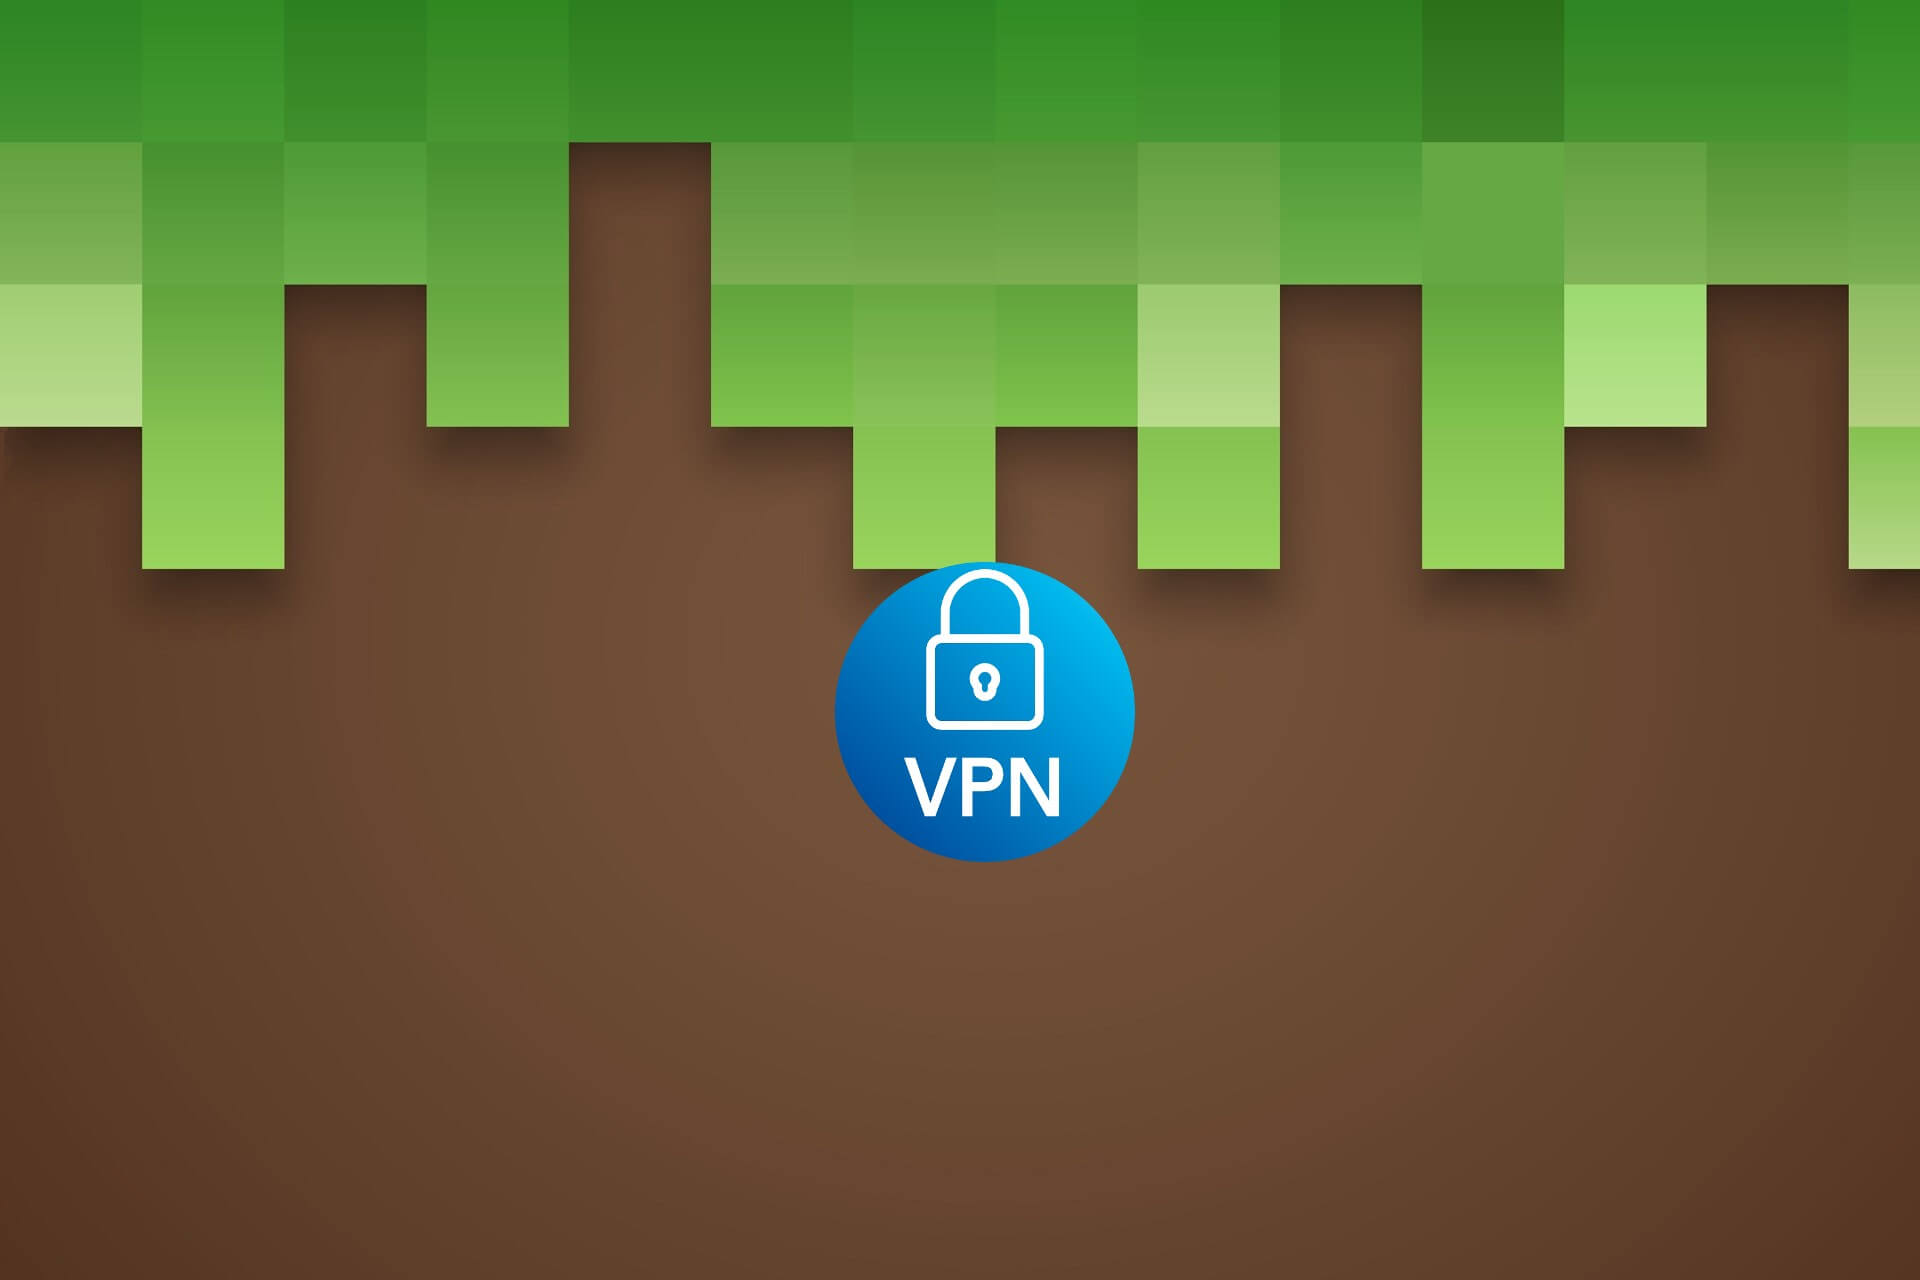 Minecraft blocks VPN users